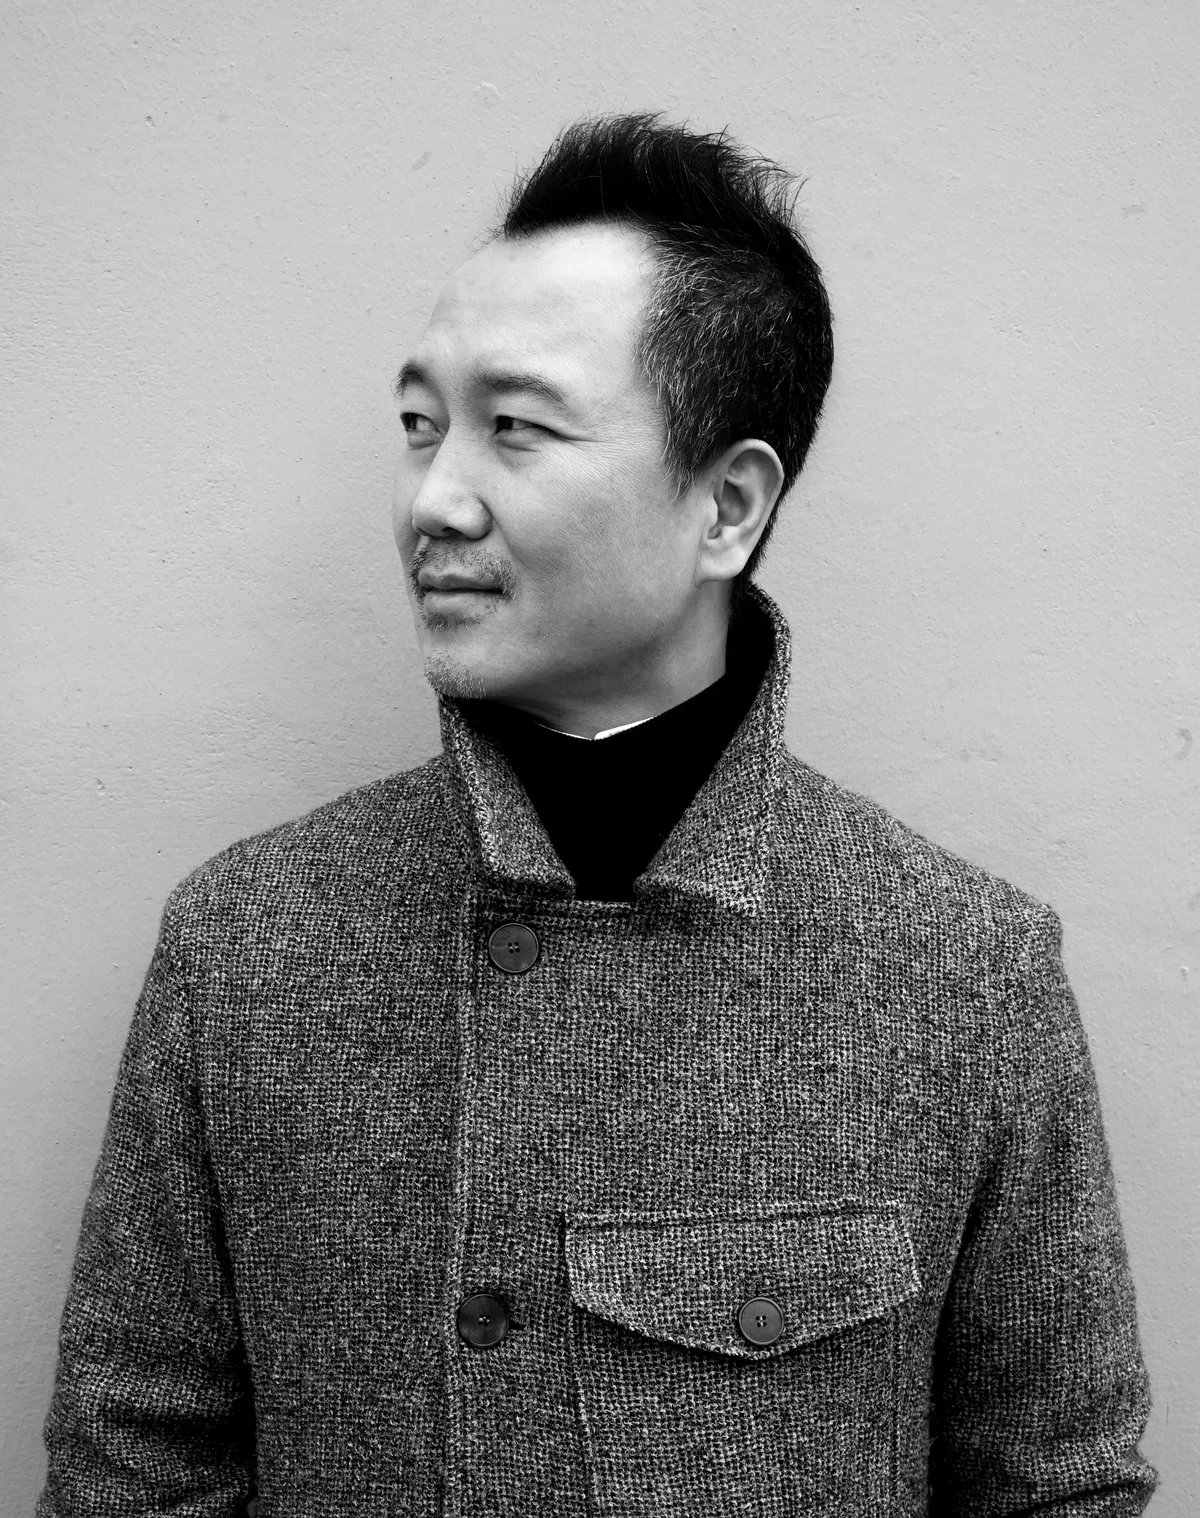 Portrait of the artist, IM Heung-soon.